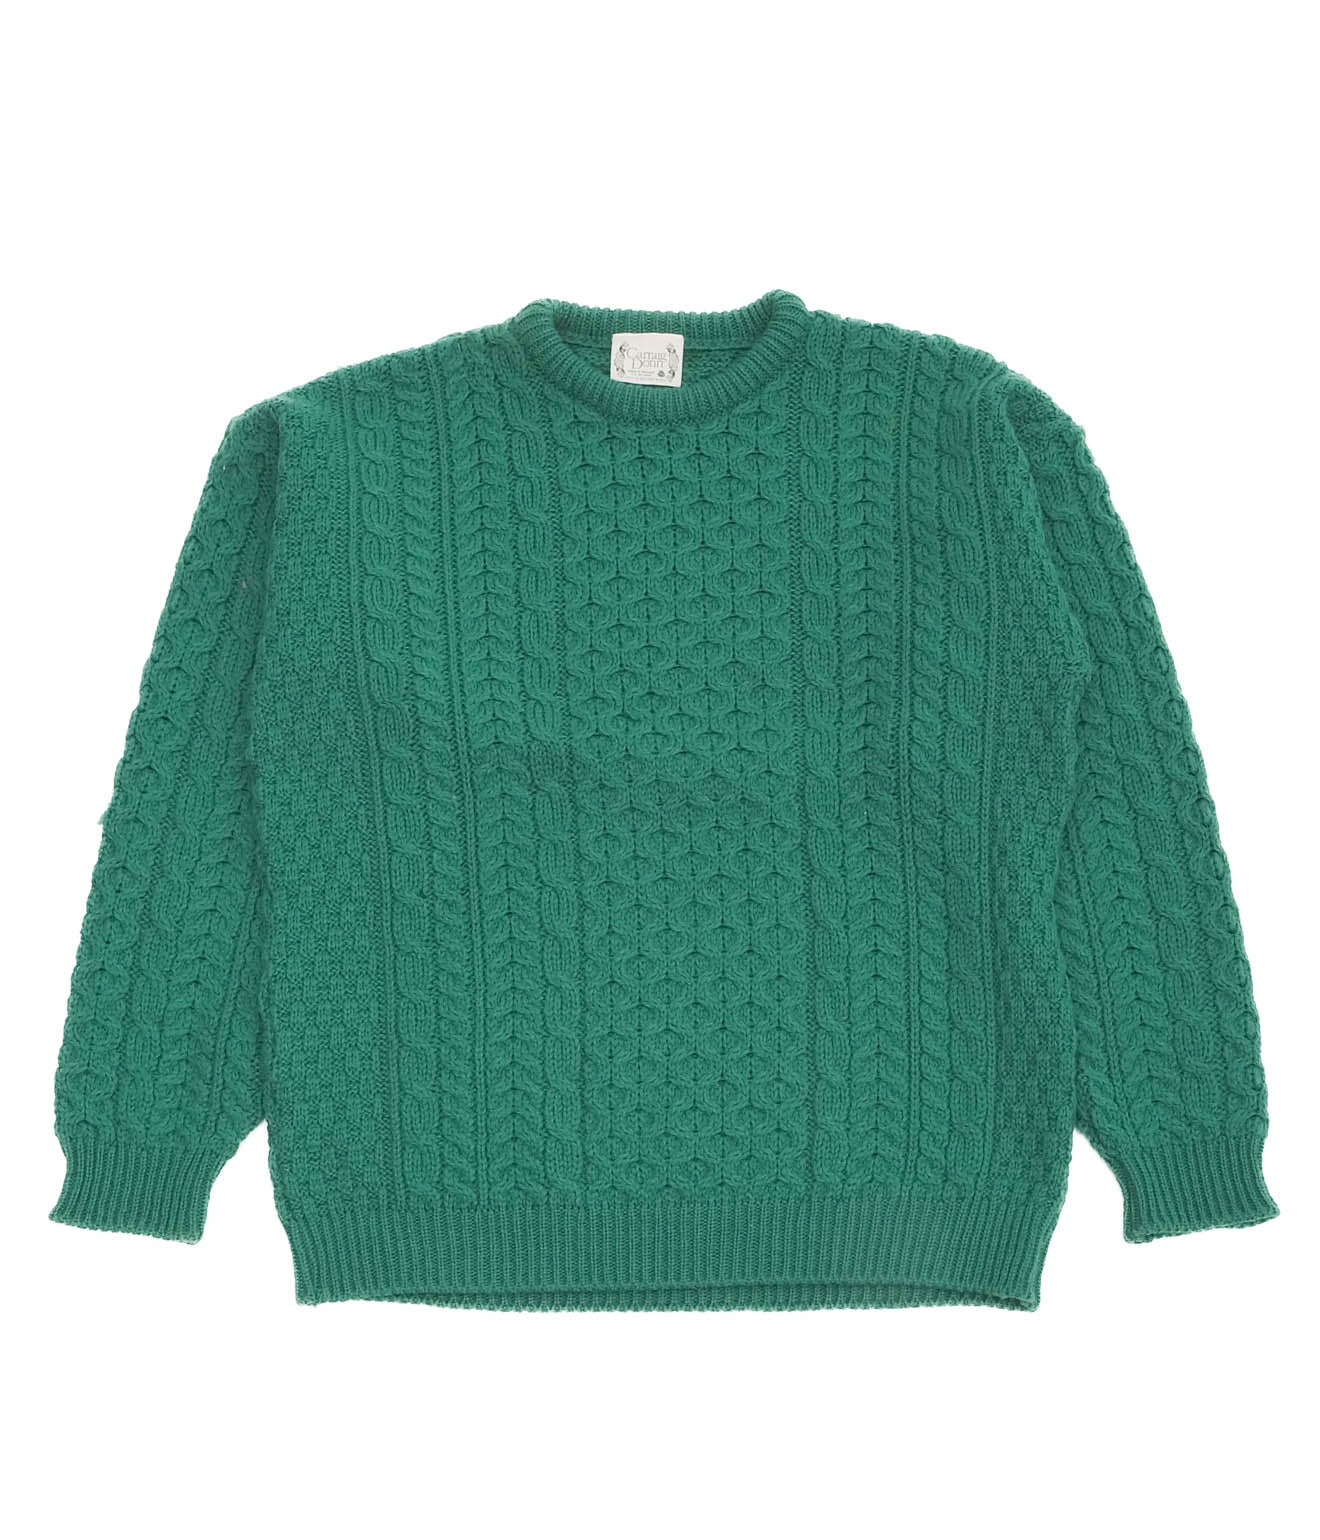 Fishermans Sweaters (Green)